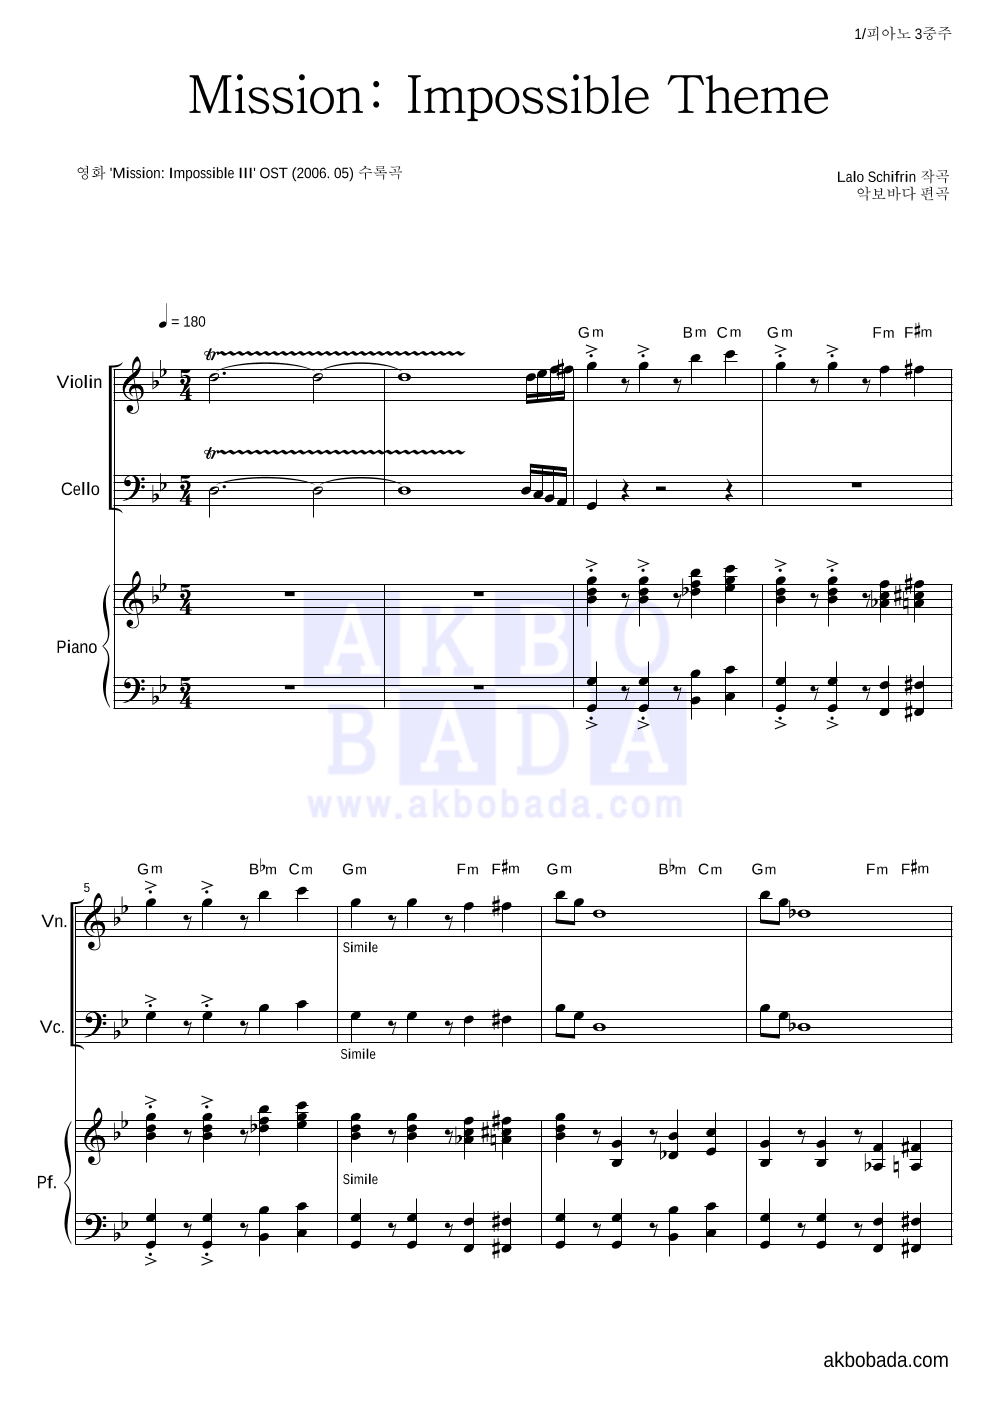 Lalo Schifrin - Mission: Impossible Theme 피아노3중주 악보 